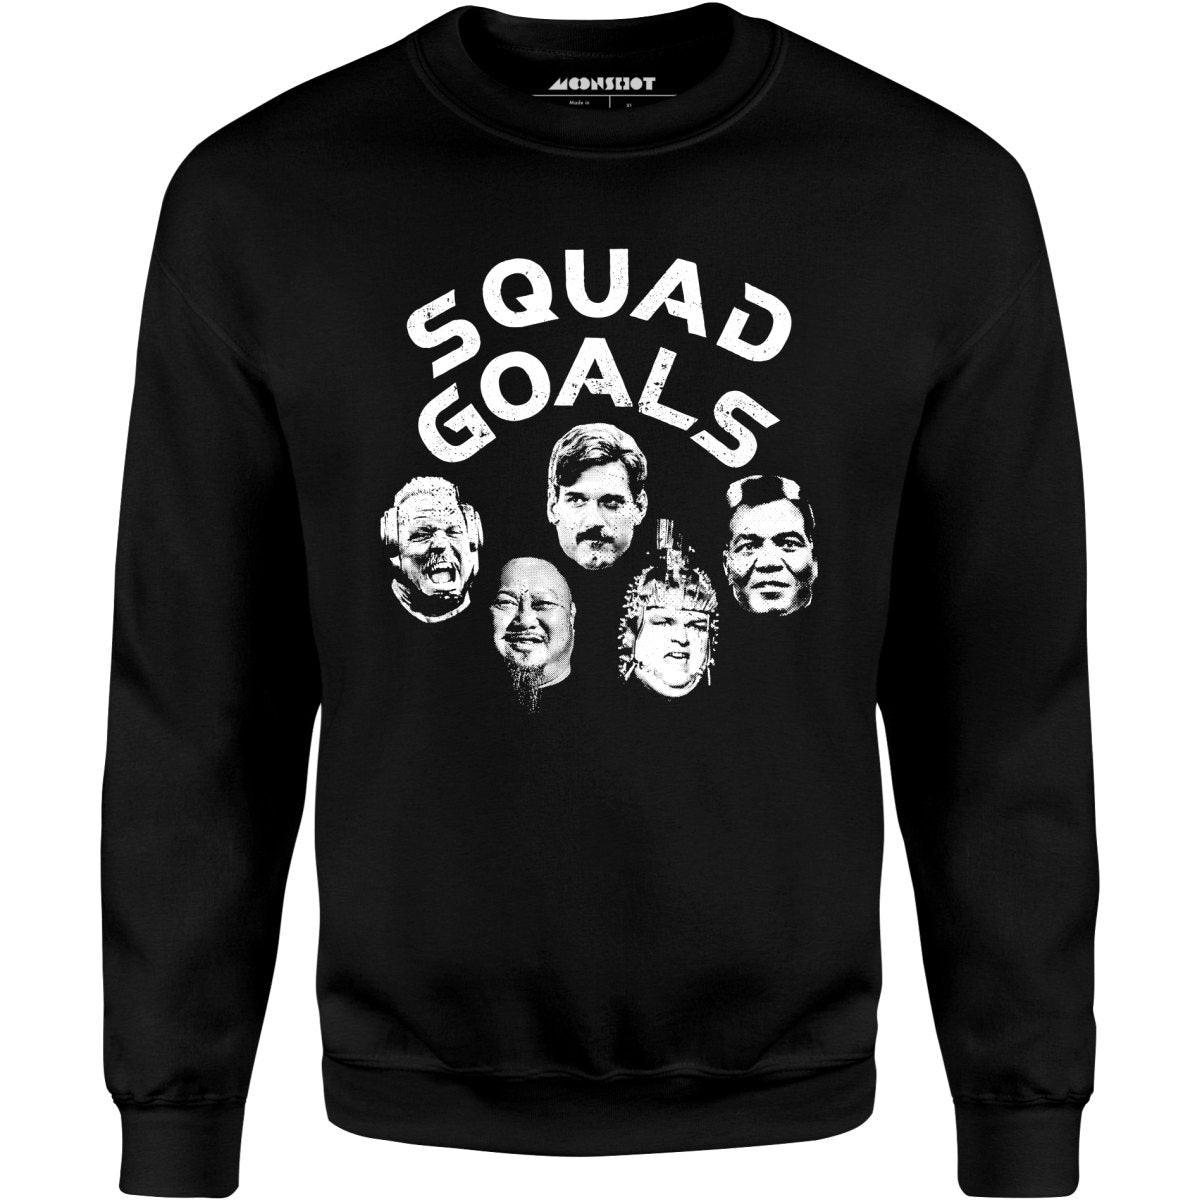 Squad Goals - Running Man Stalkers - Unisex Sweatshirt